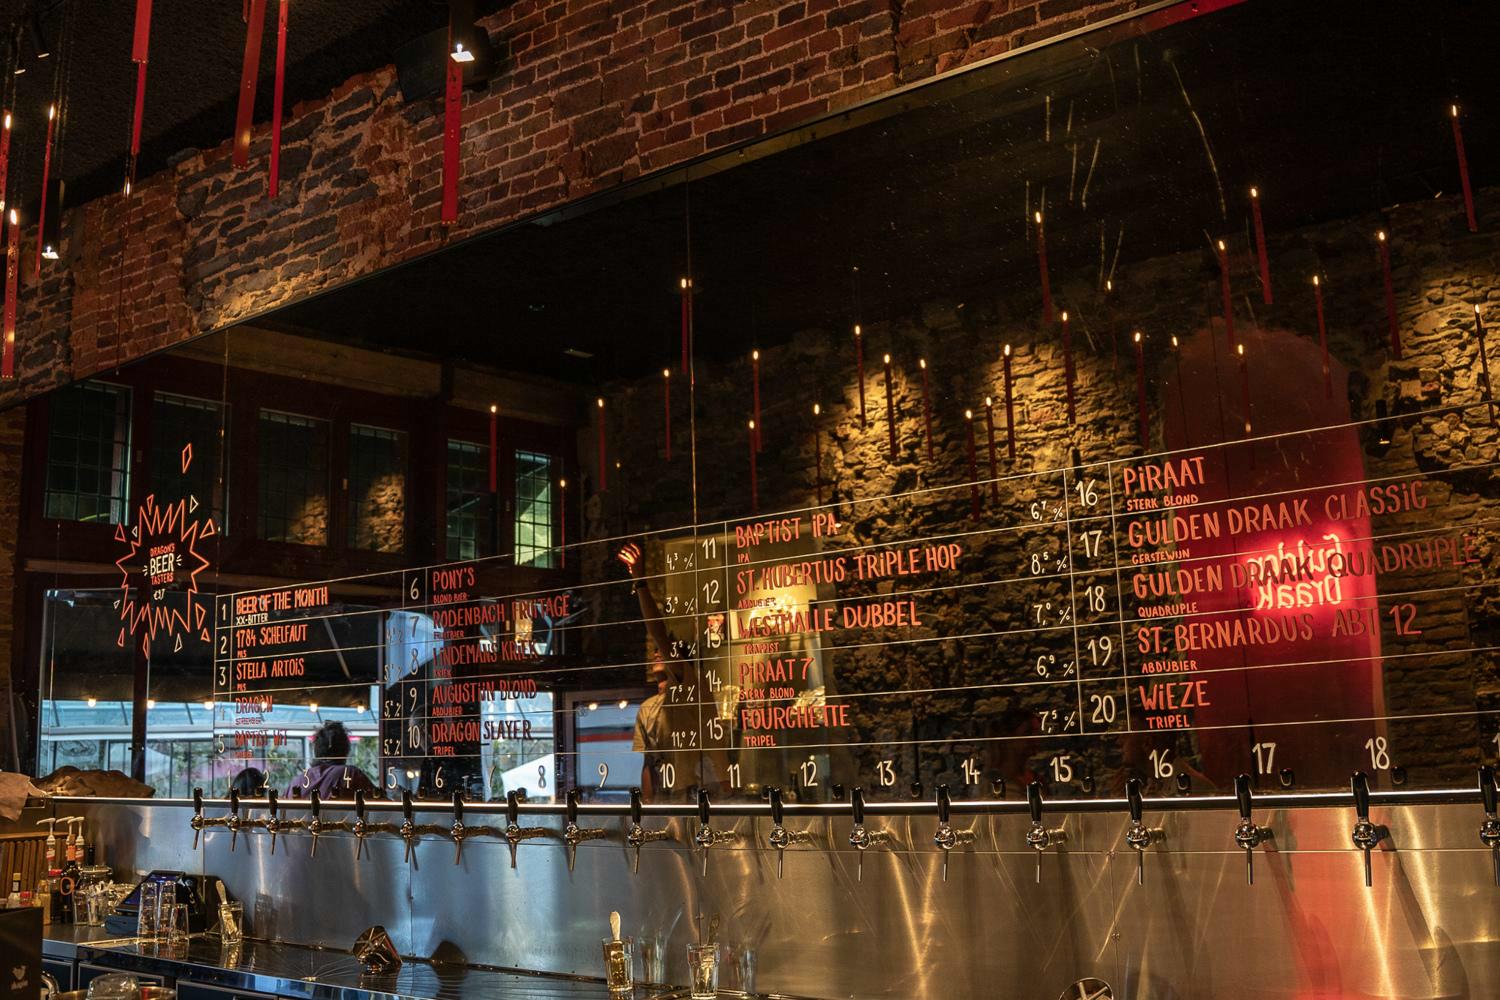 30 bier tappen op een rij in bier café dragon